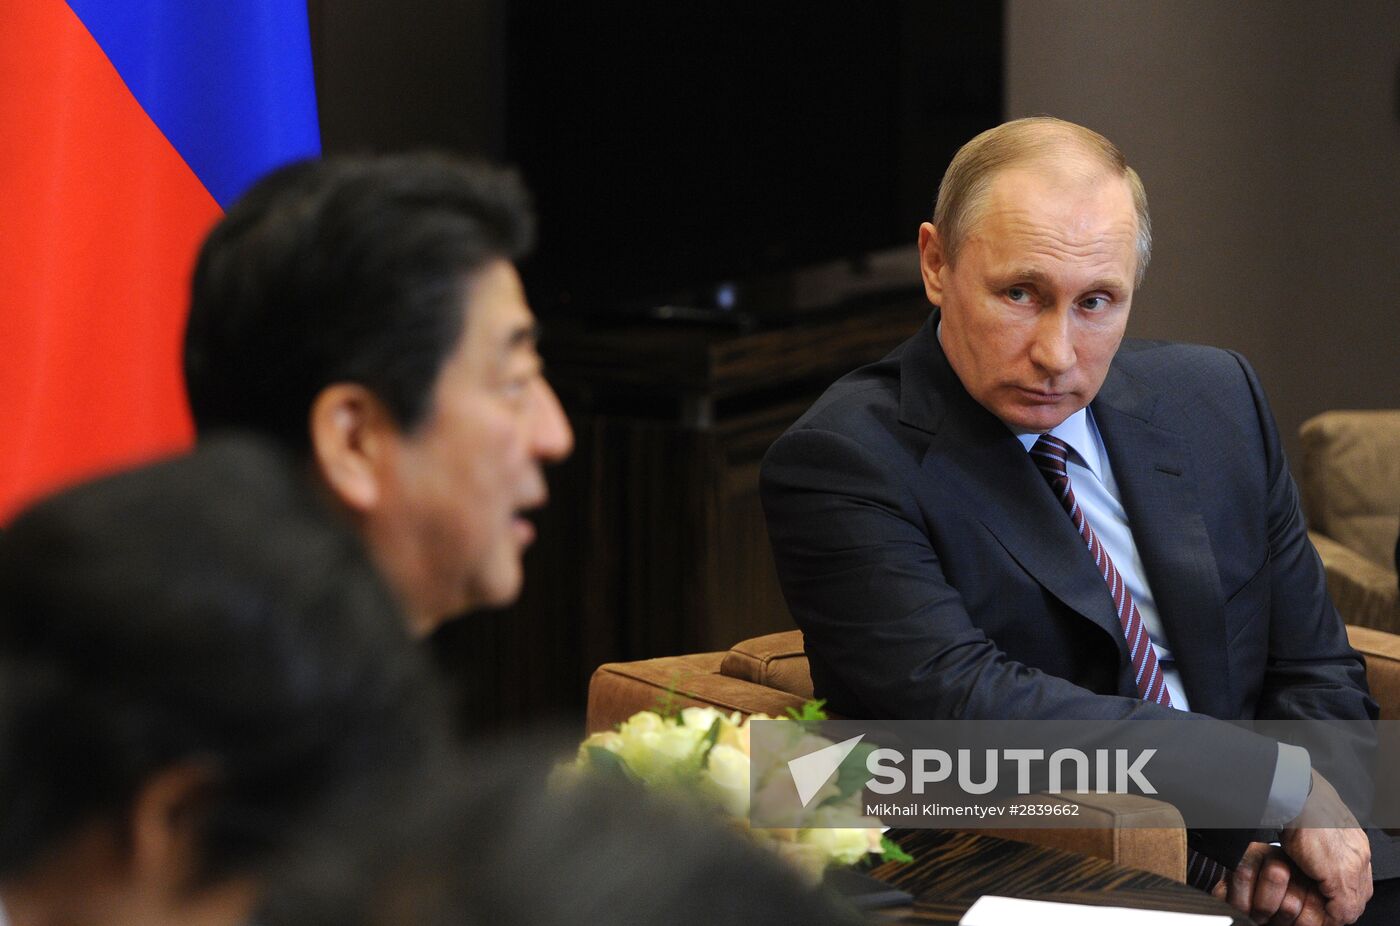 President Putin meets with Japan's Prime Minister Shinzo Abe